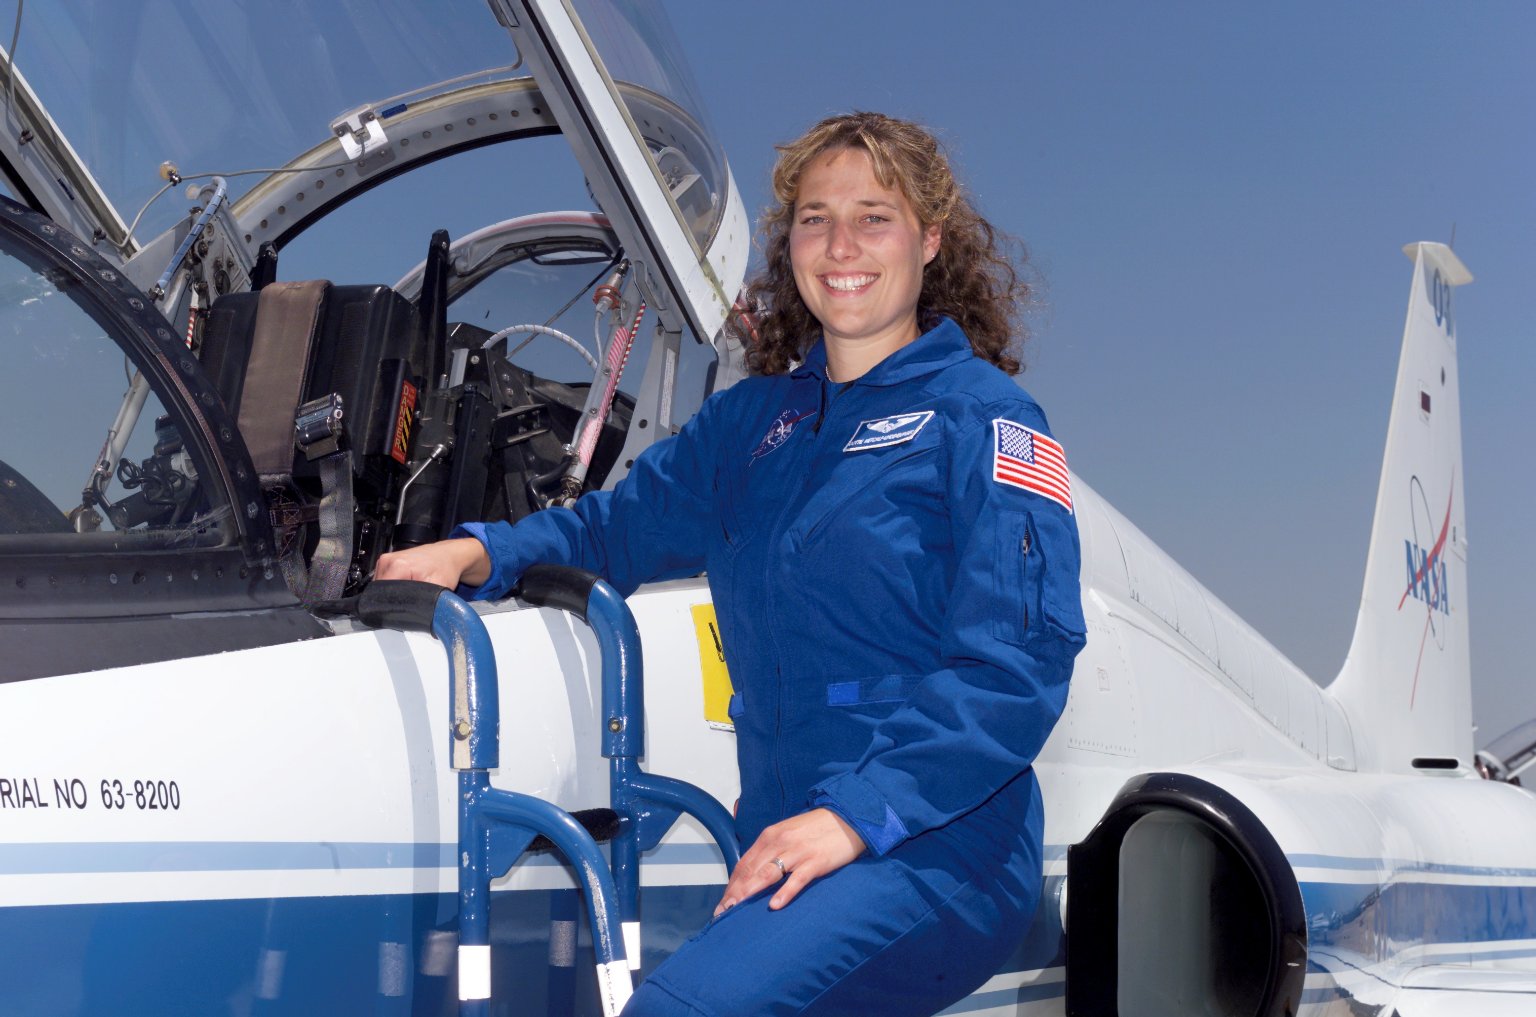 Featured image: 036 FailureNotOption Dottie - Read full post: Failure is Not an Option: Interview with NASA Astronaut Dottie Metcalf-Lindenburger